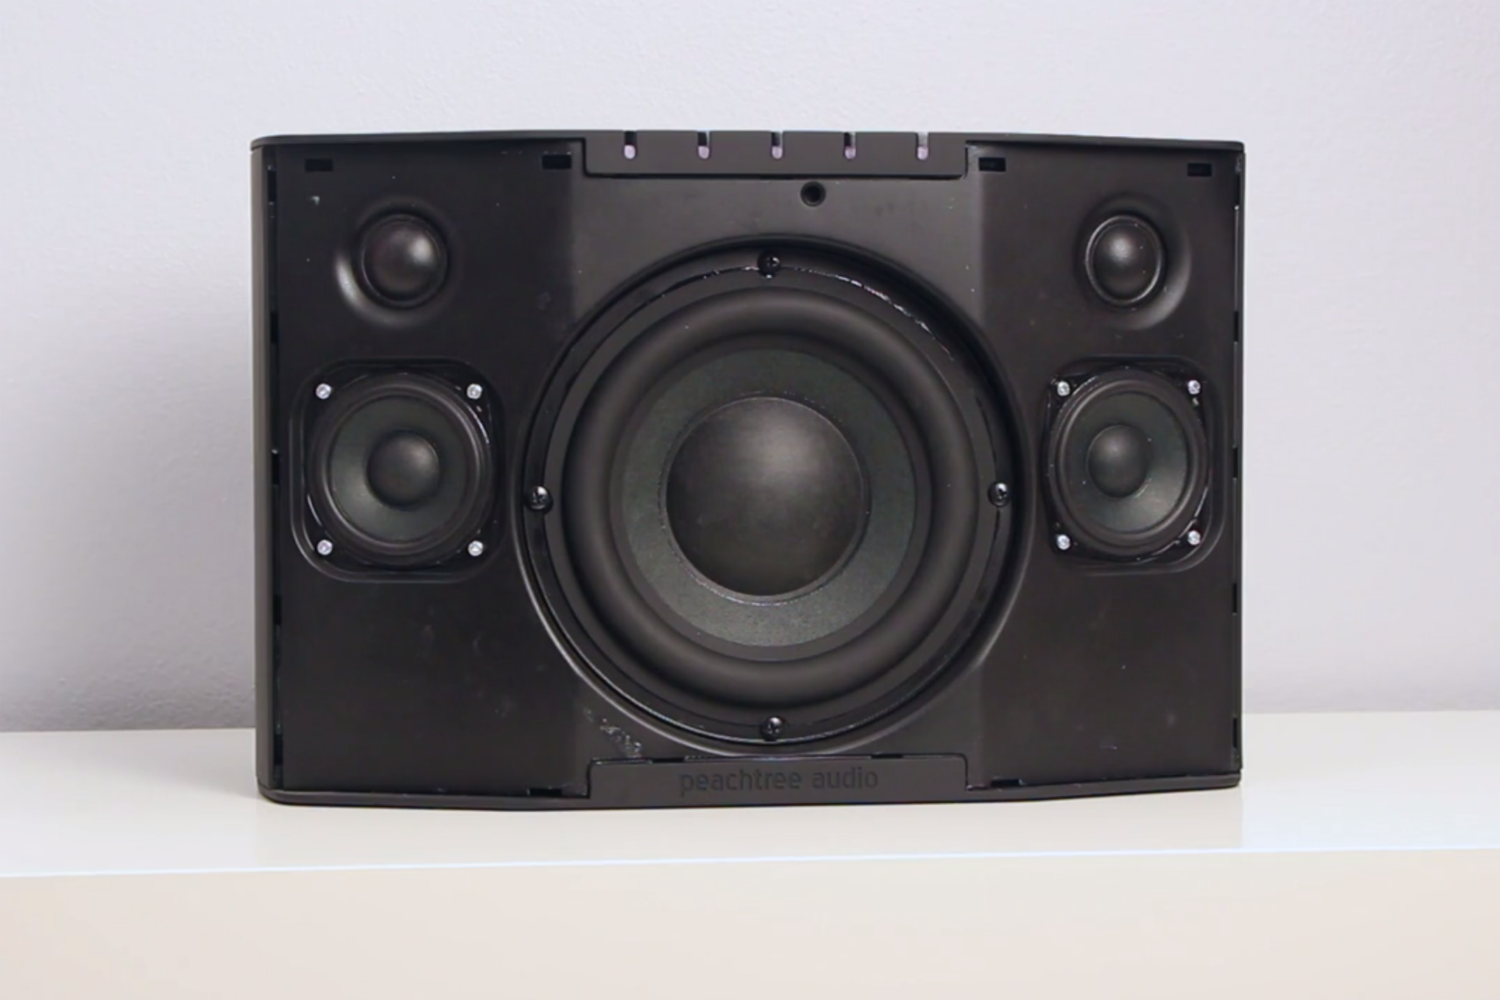 peachtrees deepblue2 bluetooth speaker indiegog offers 440 reasons buy vid shot